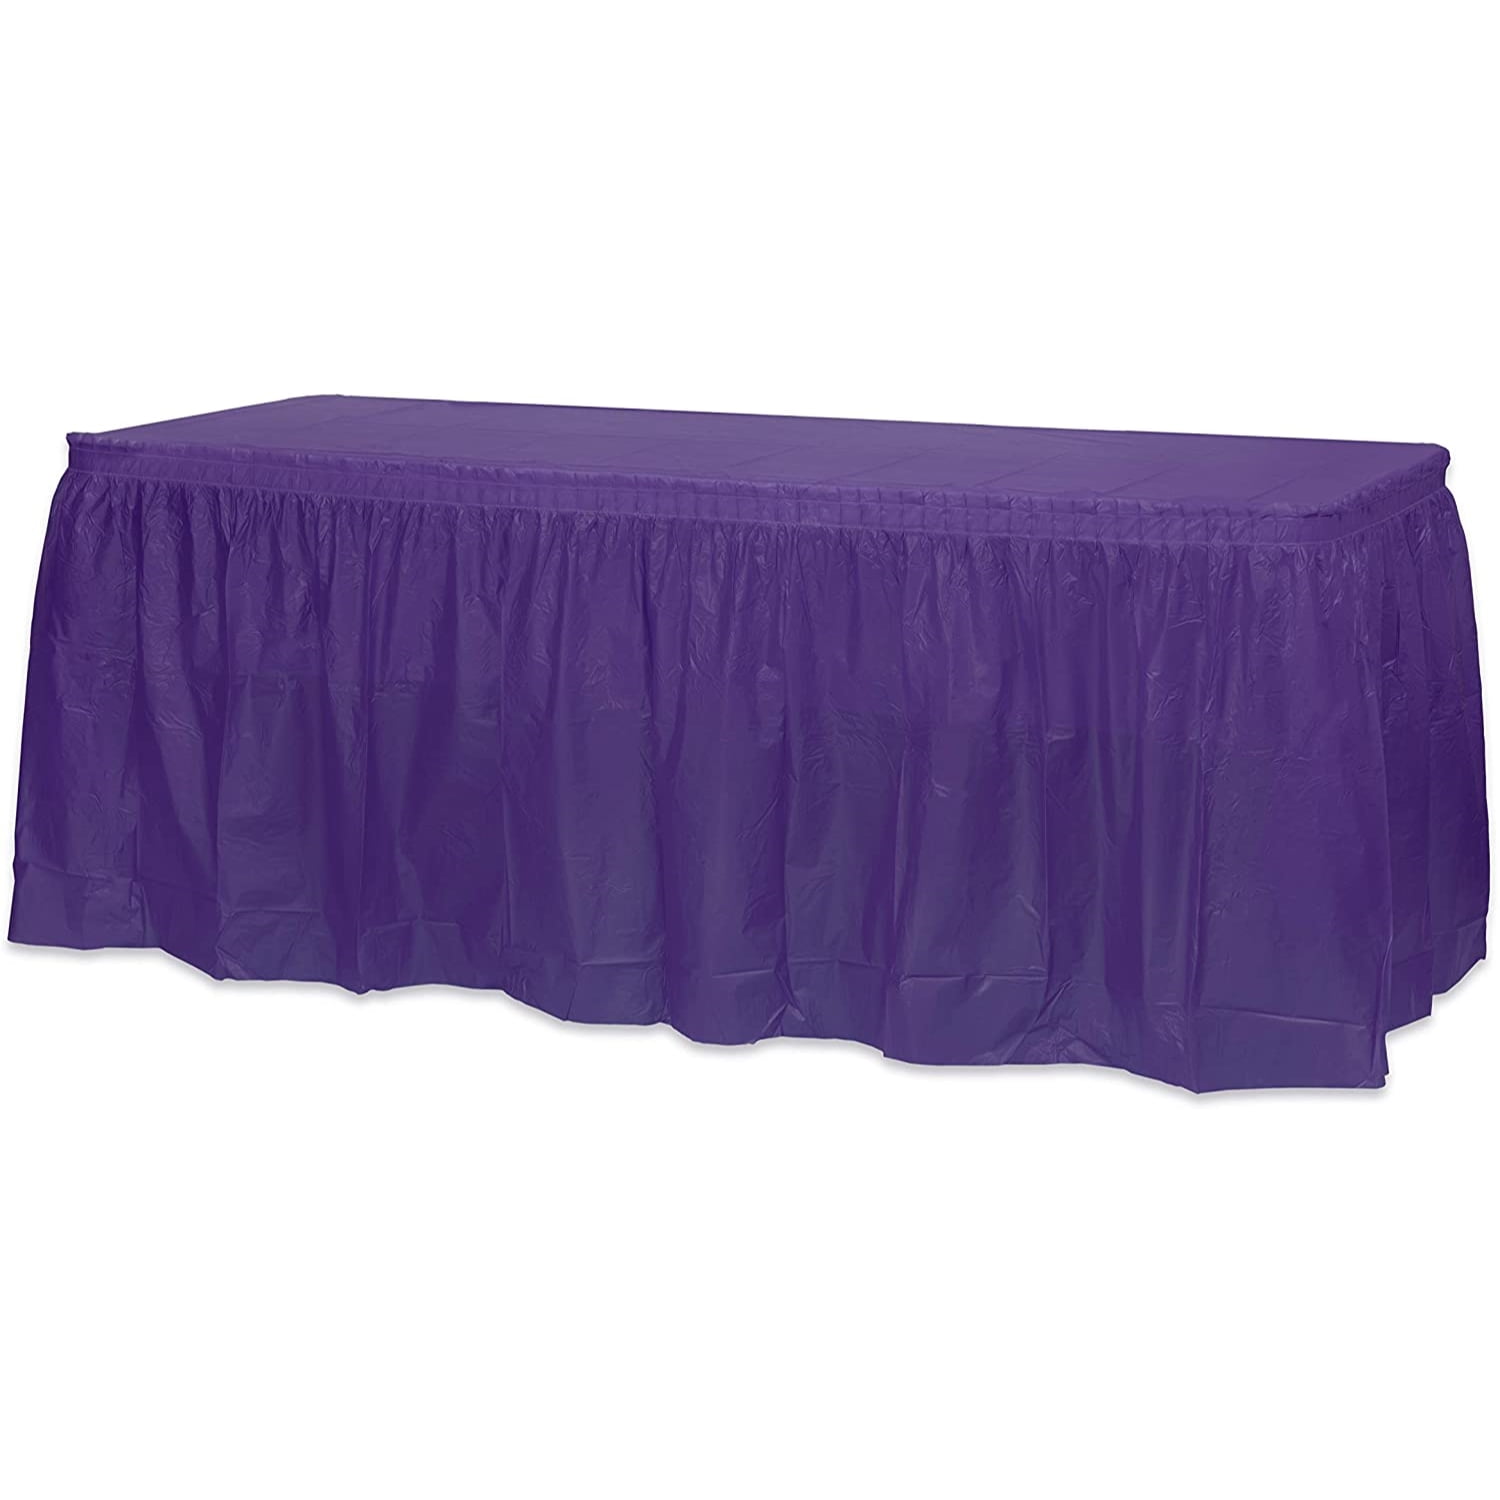 PUZINE Metal foil edge table skirt purple 3 feet *8 feet metal foil party table skirt 108 x 30 wire background party wedding dress table skirt blue